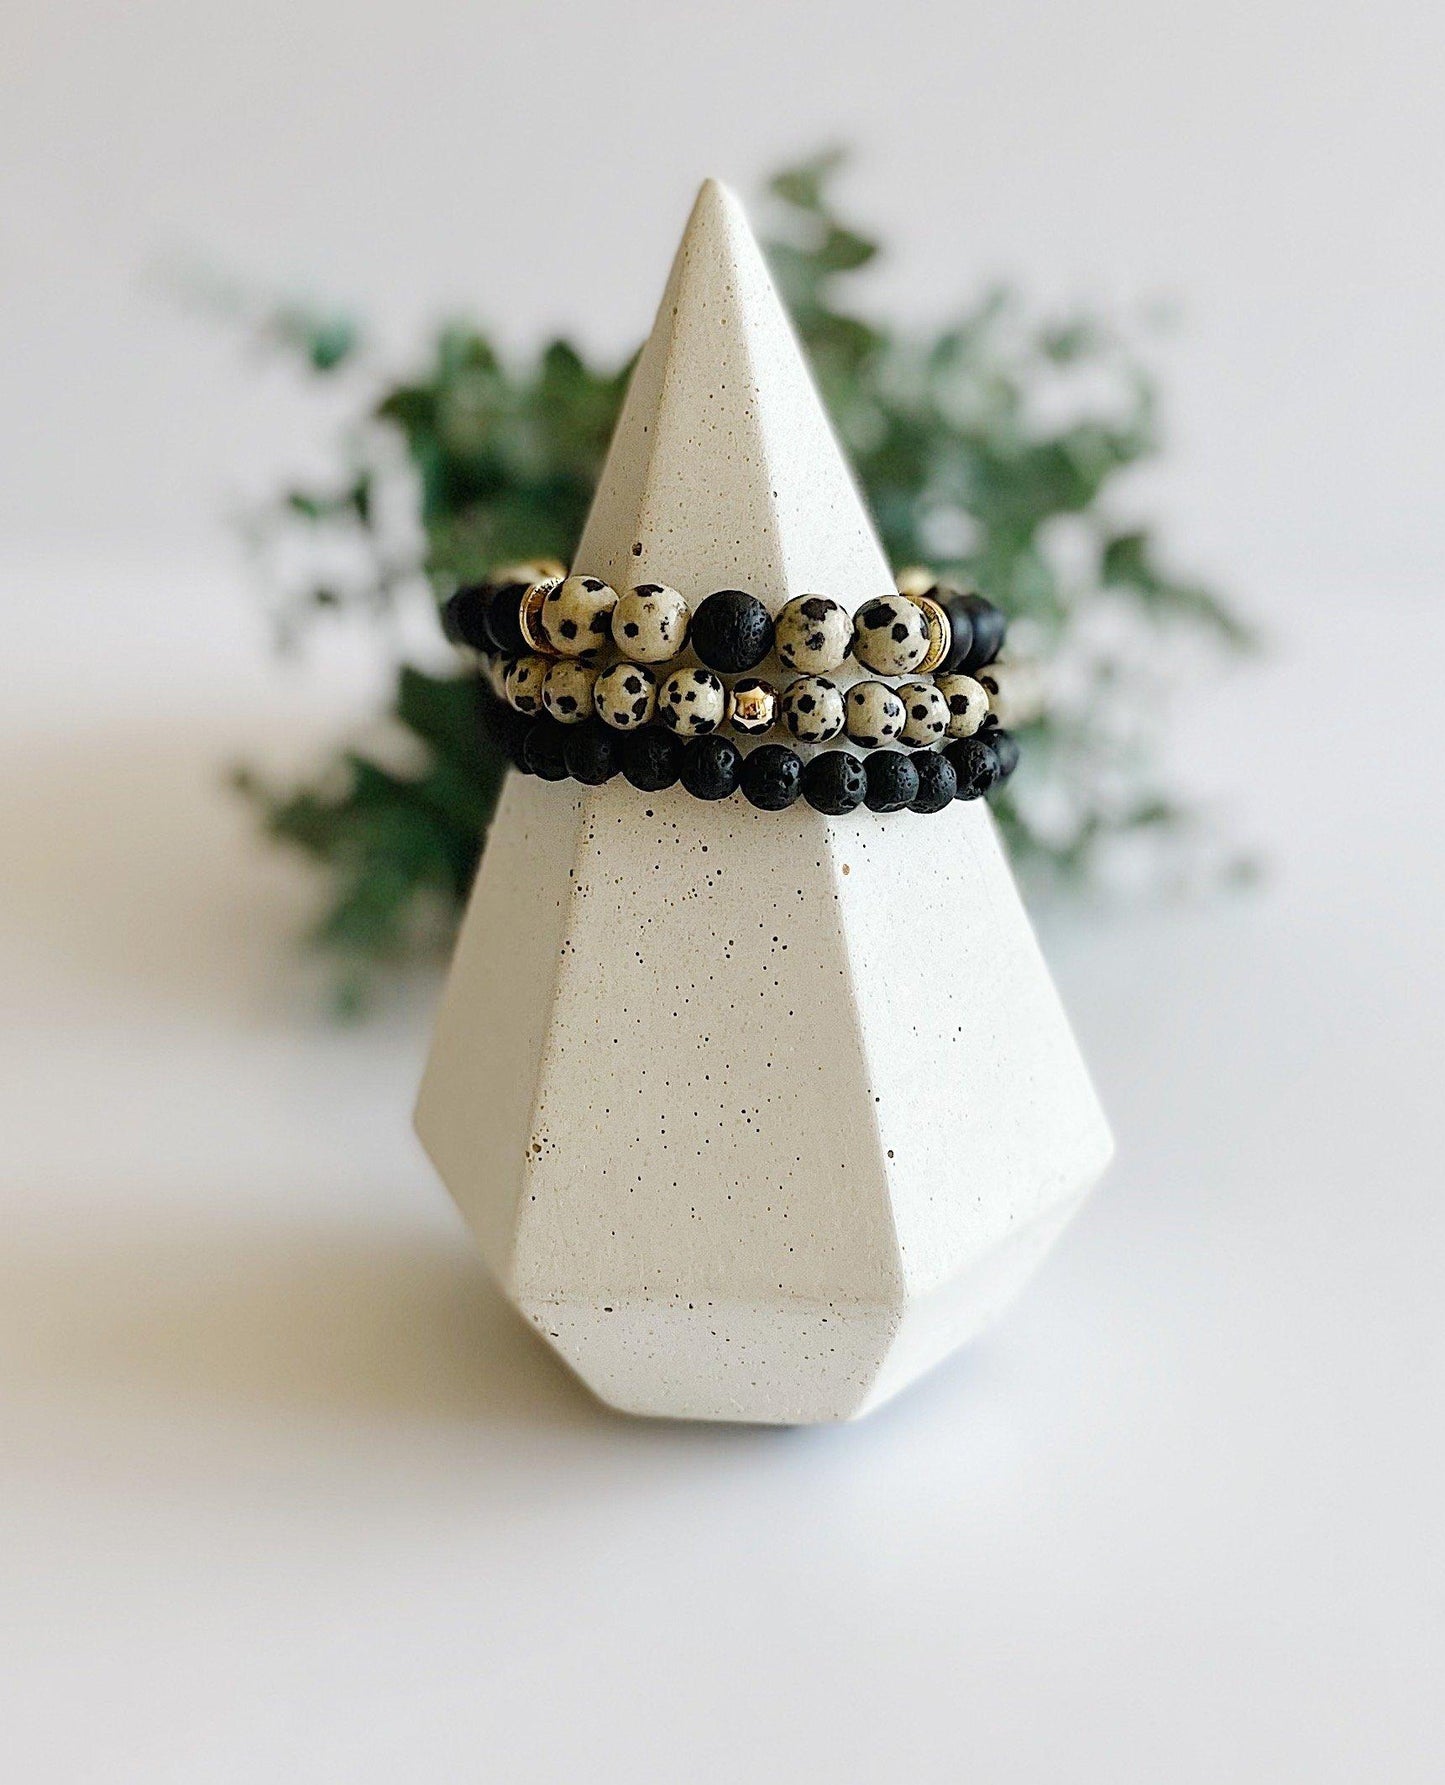 Dalmatian Jasper + Black Onyx bead bracelets